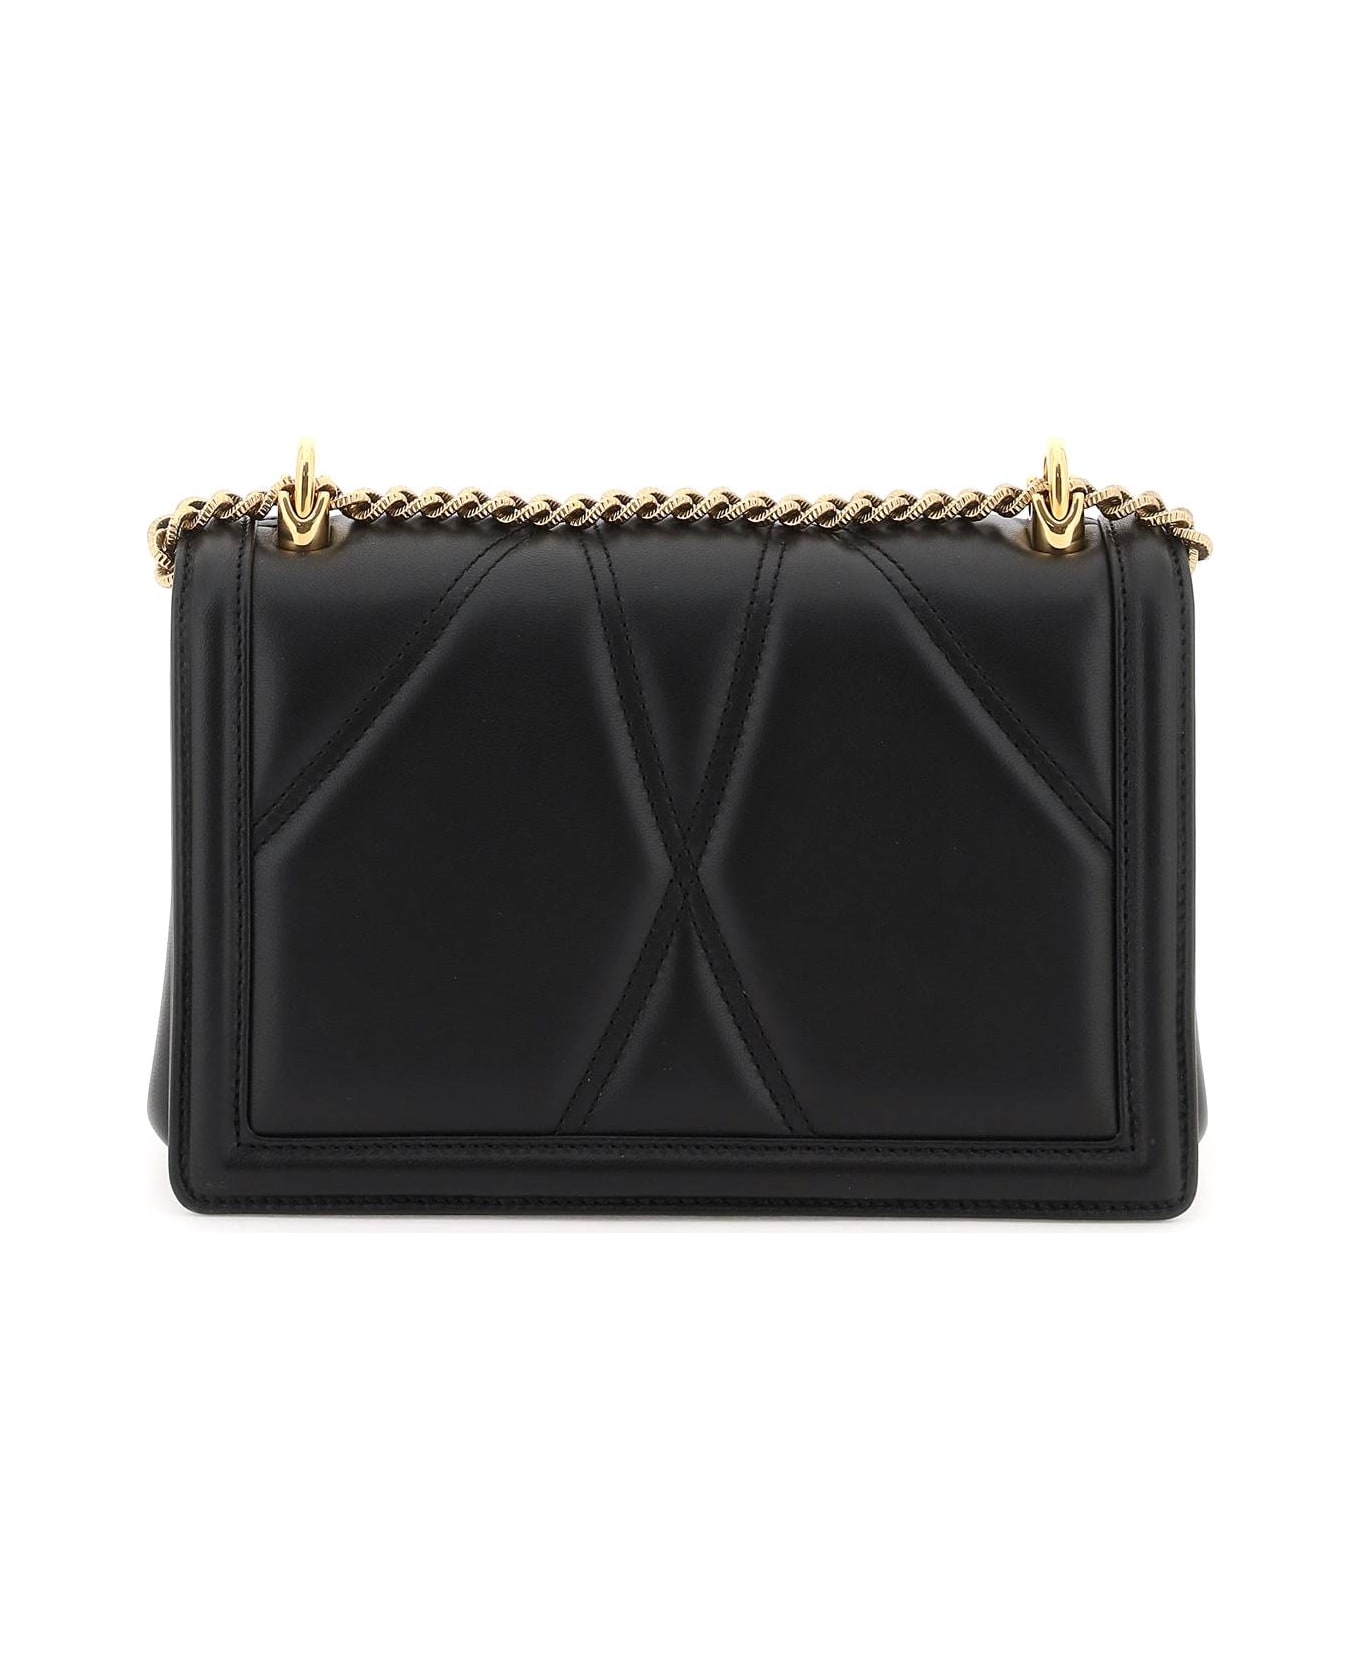 Dolce & Gabbana Devotion Bag - Black